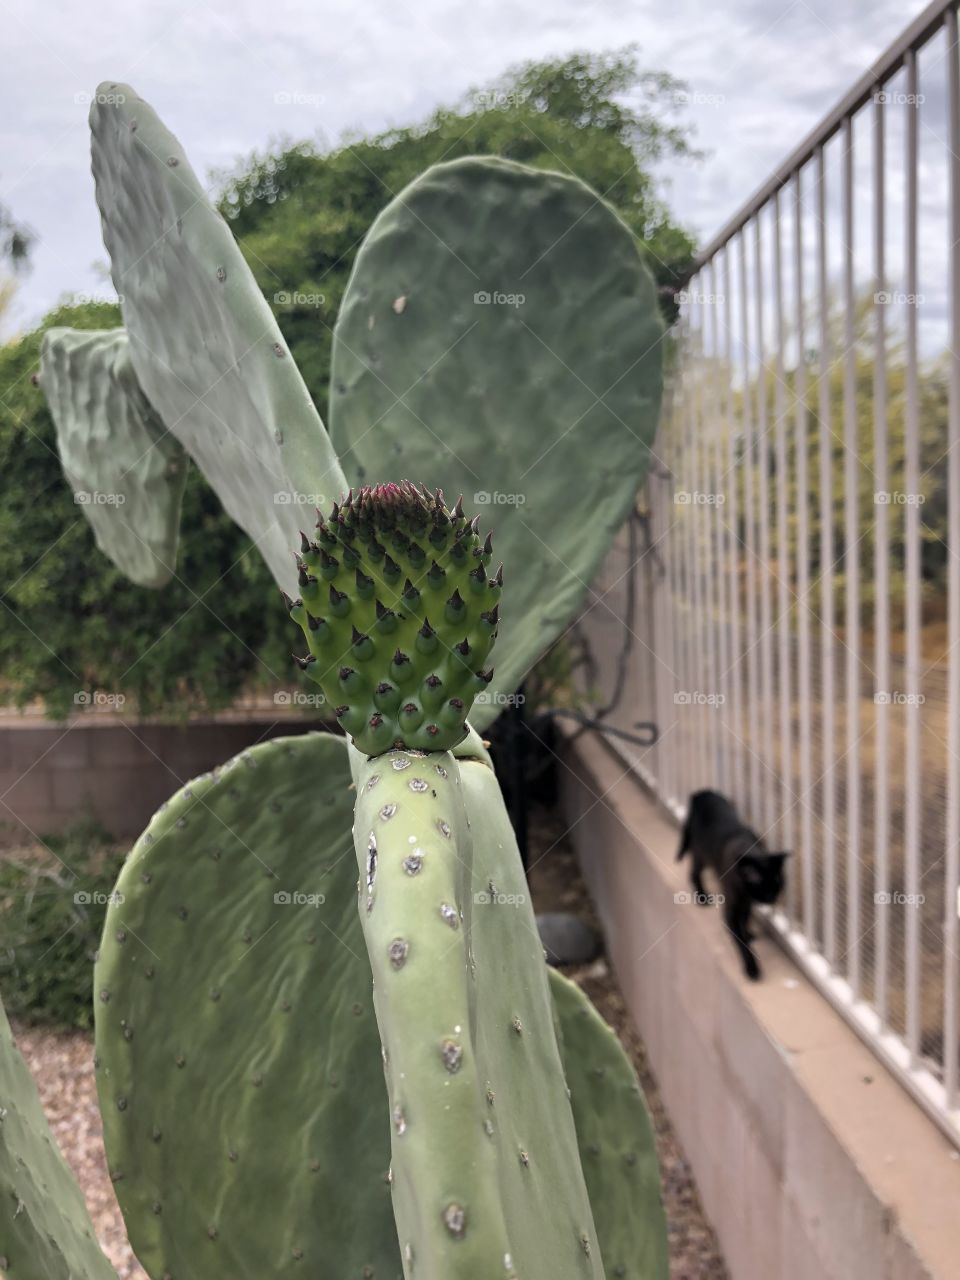 Growing cactus